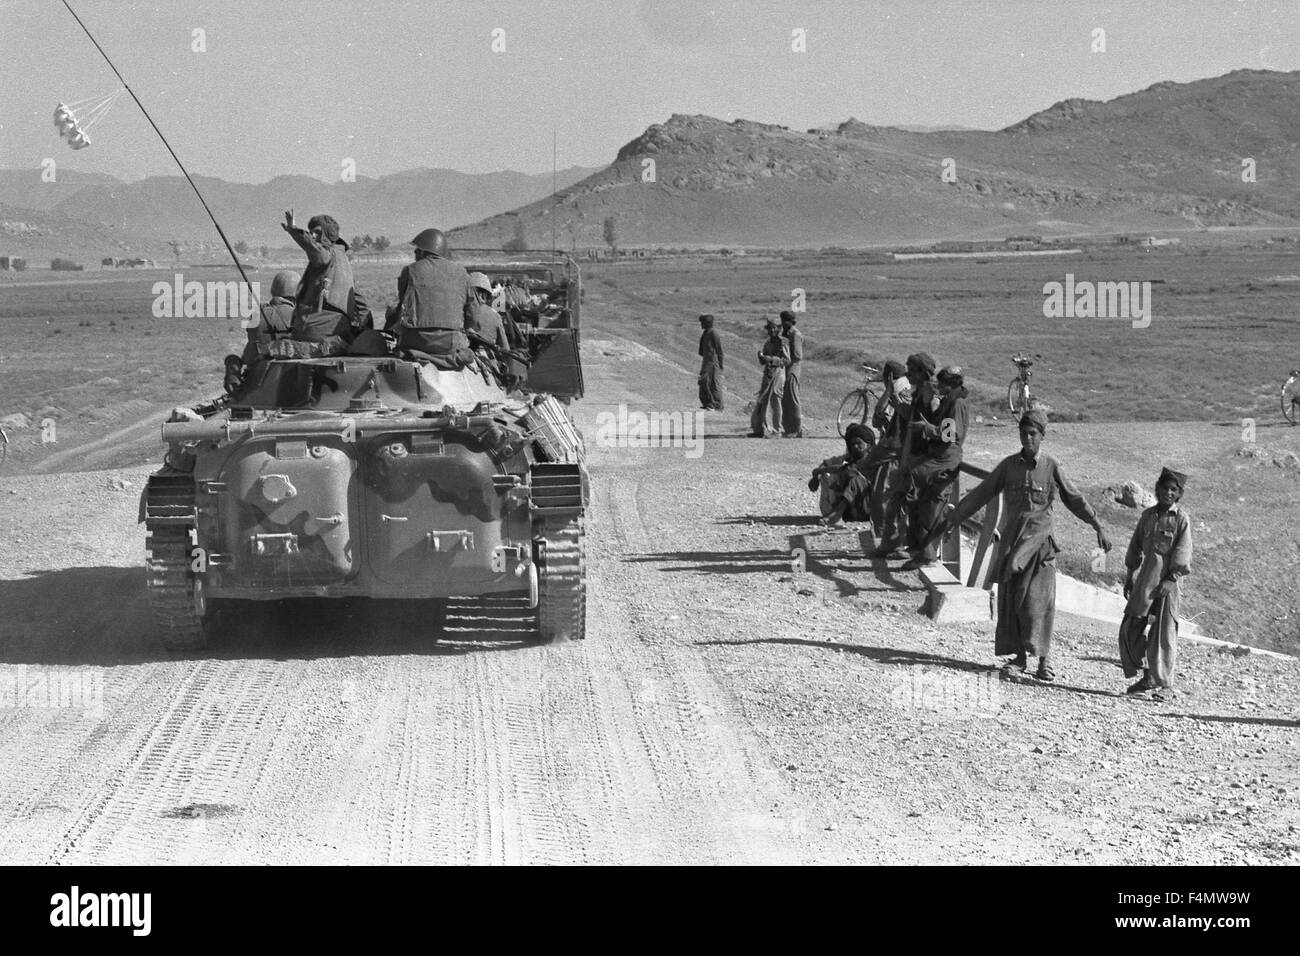 Soviet Afghanistan war - Page 6 Afghanistan-the-soviet-military-technics-on-road-to-kandahar-F4MW9W